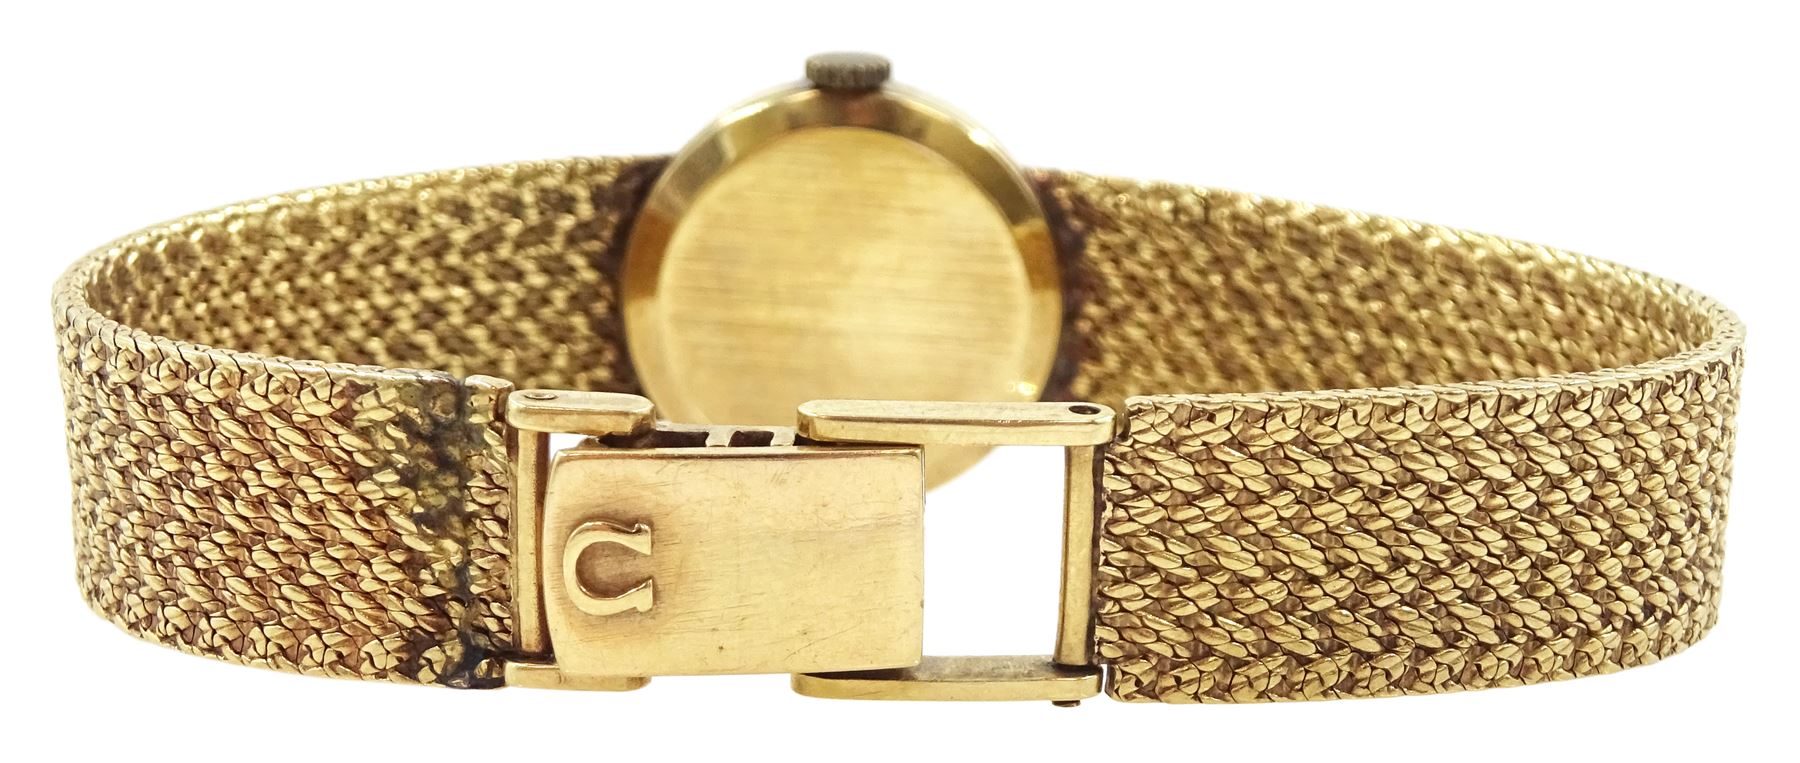 Omega ladies 9ct gold manual wind wristwatch - Image 2 of 3